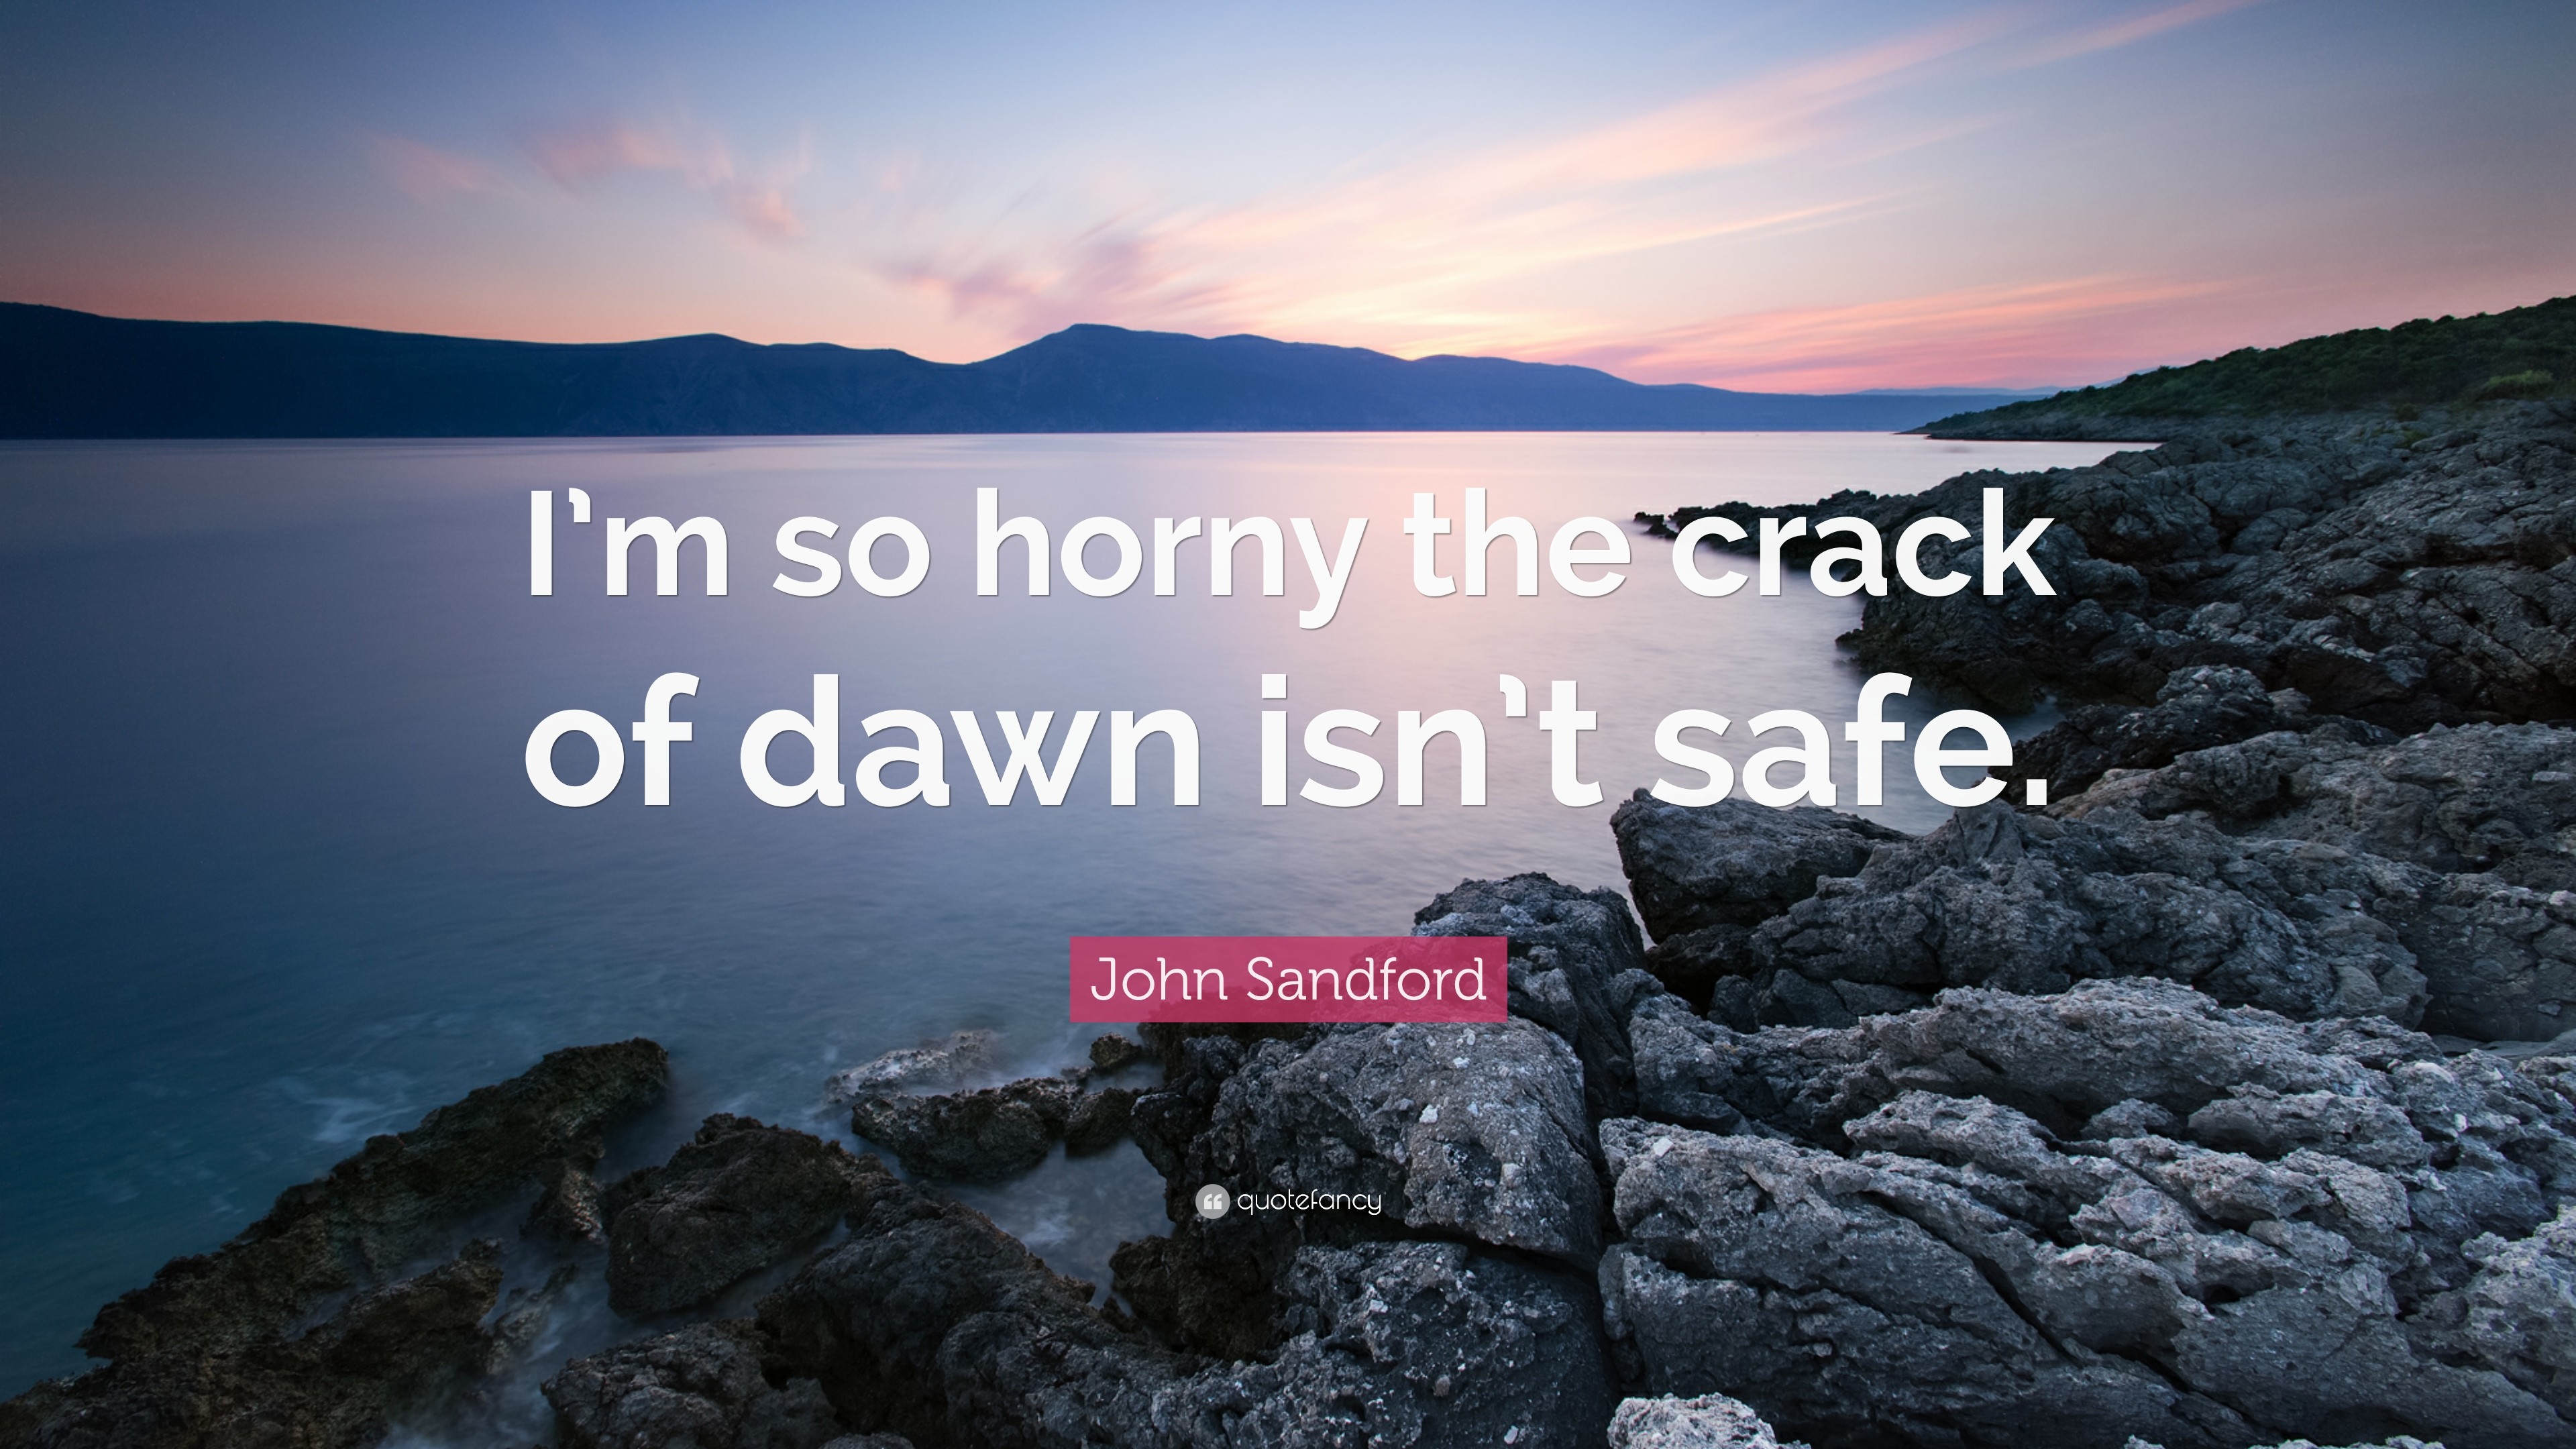 3840x2160 John Sandford Quote: “I'm so horny the crack of dawn isn'